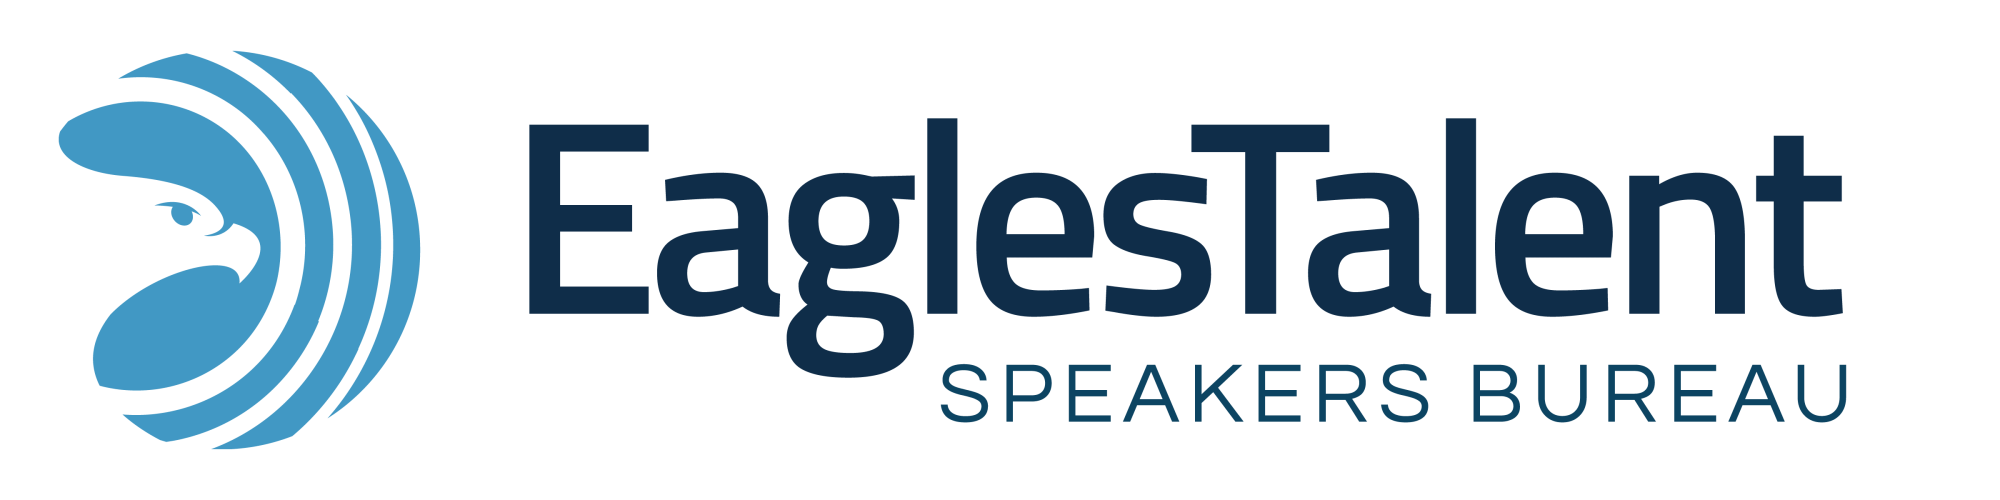 Eagles Talent - Speakers Bureau for Motivational and Inspirational Keynote Speakers